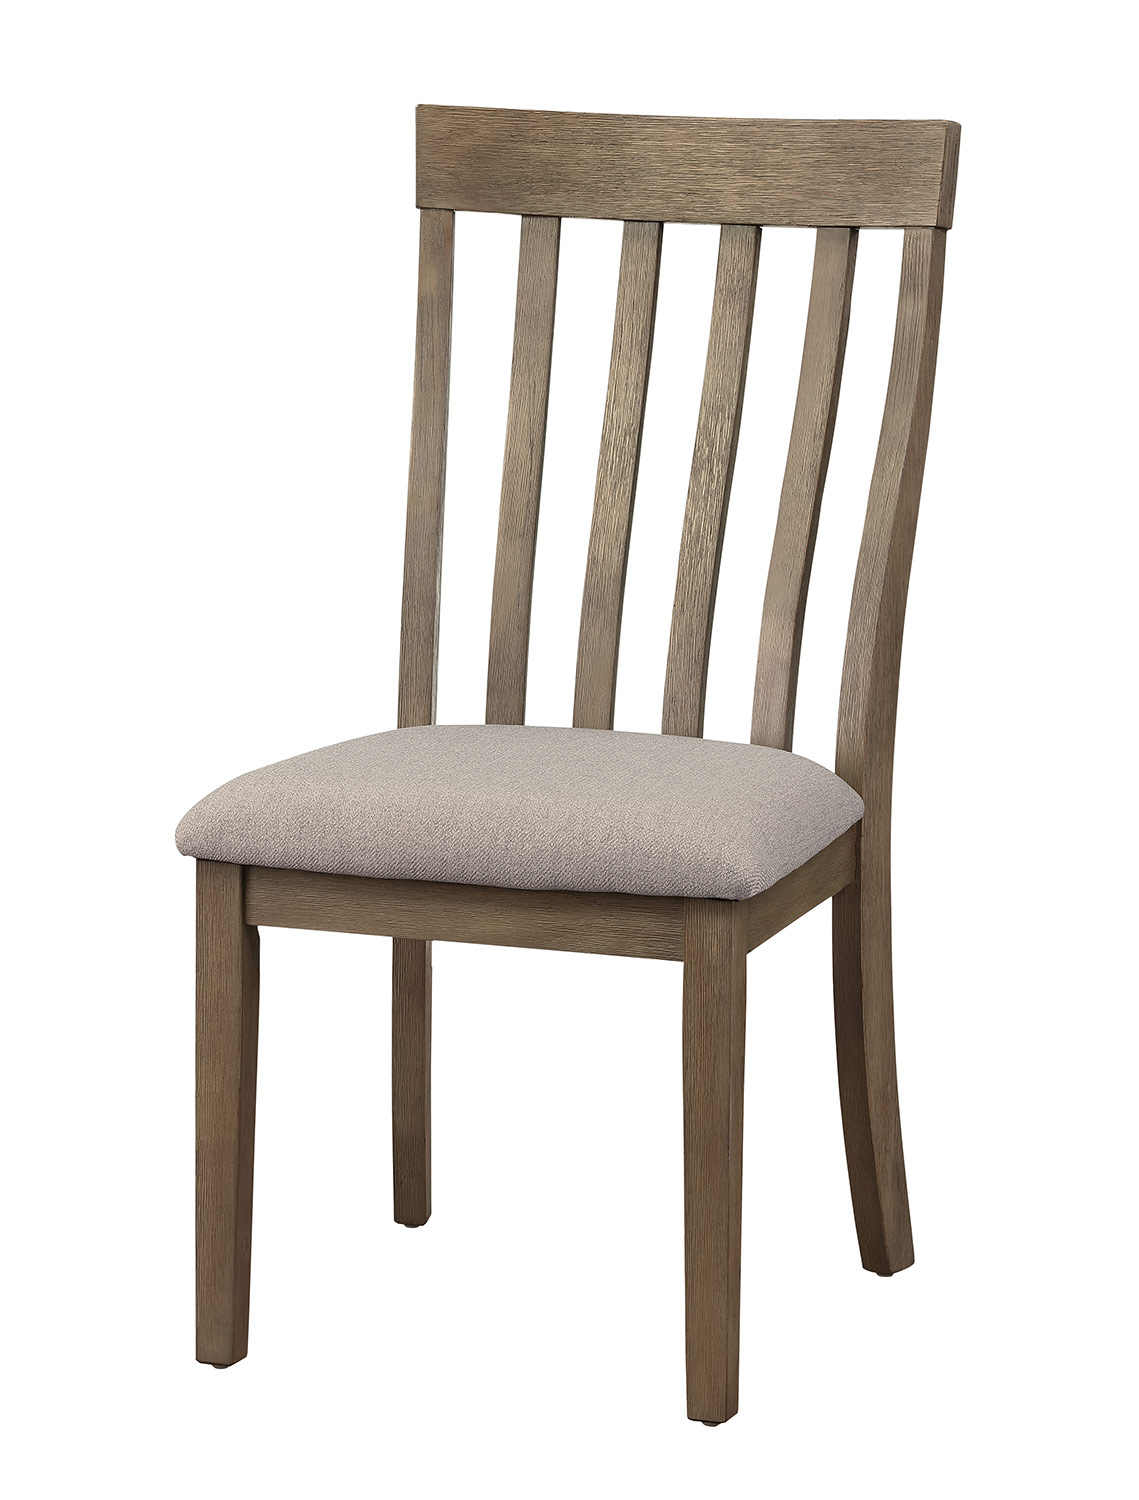 Homelegance Armhurst Side Chair - Brown